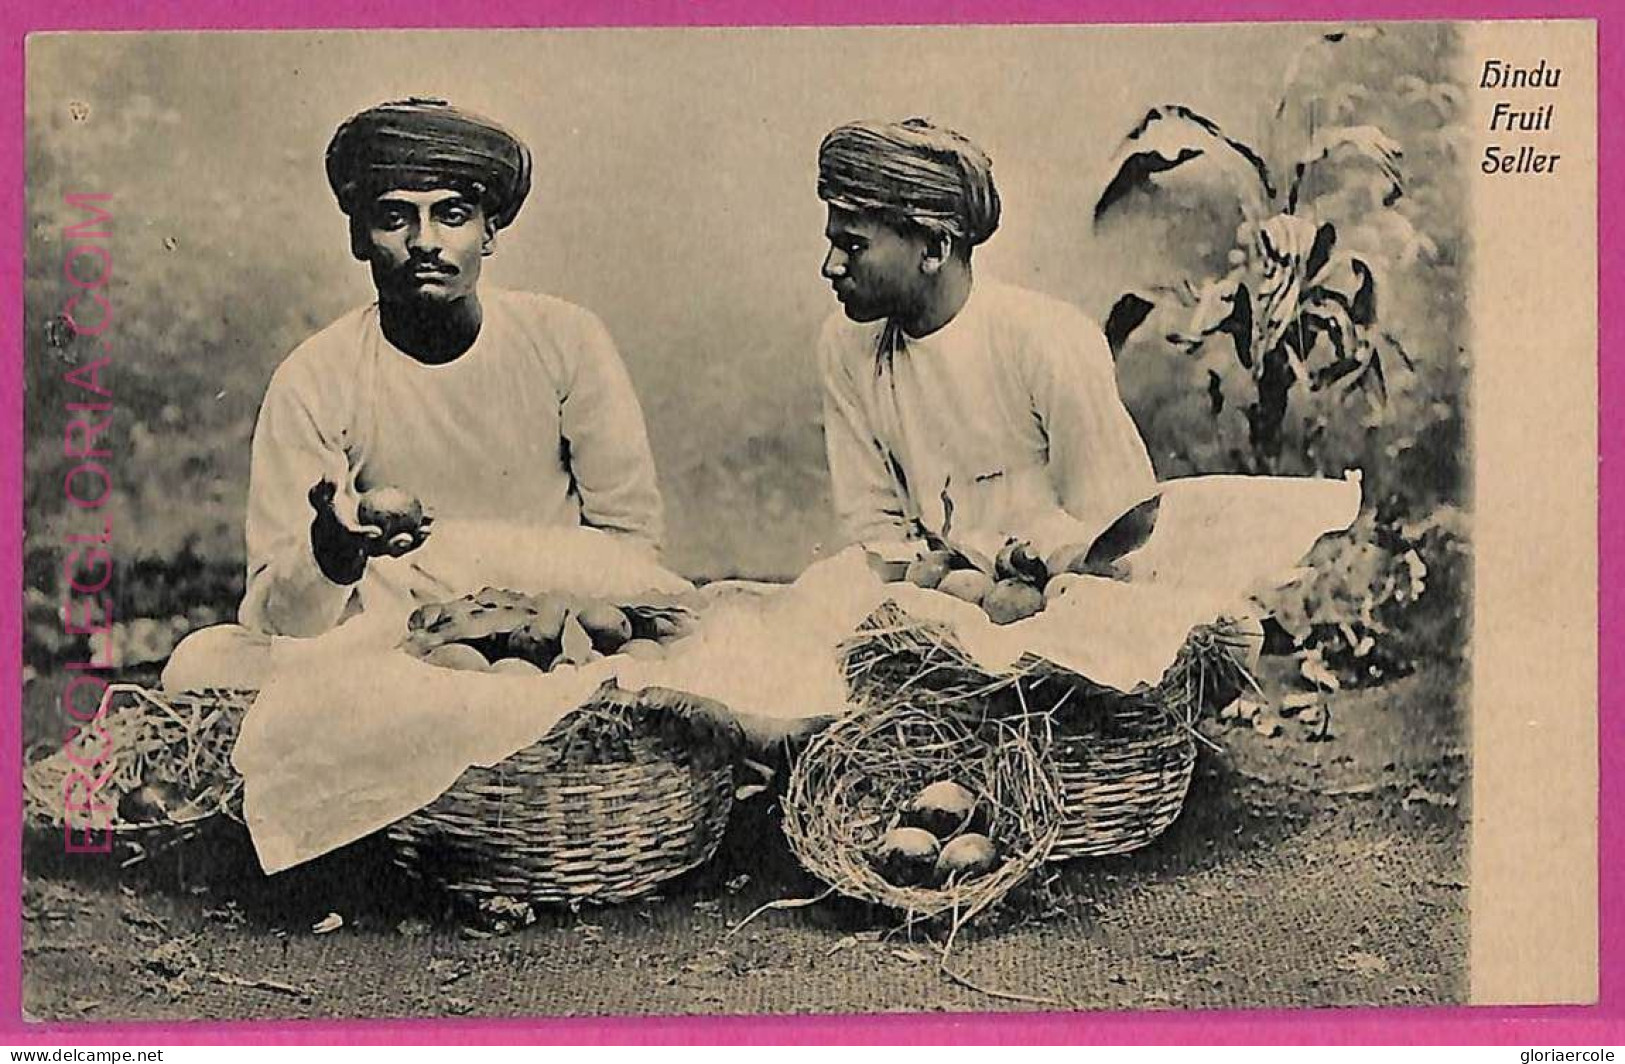 Ag3778  - INDIA - VINTAGE POSTCARD  - Gindu Fruit Seller, Ethnic - India